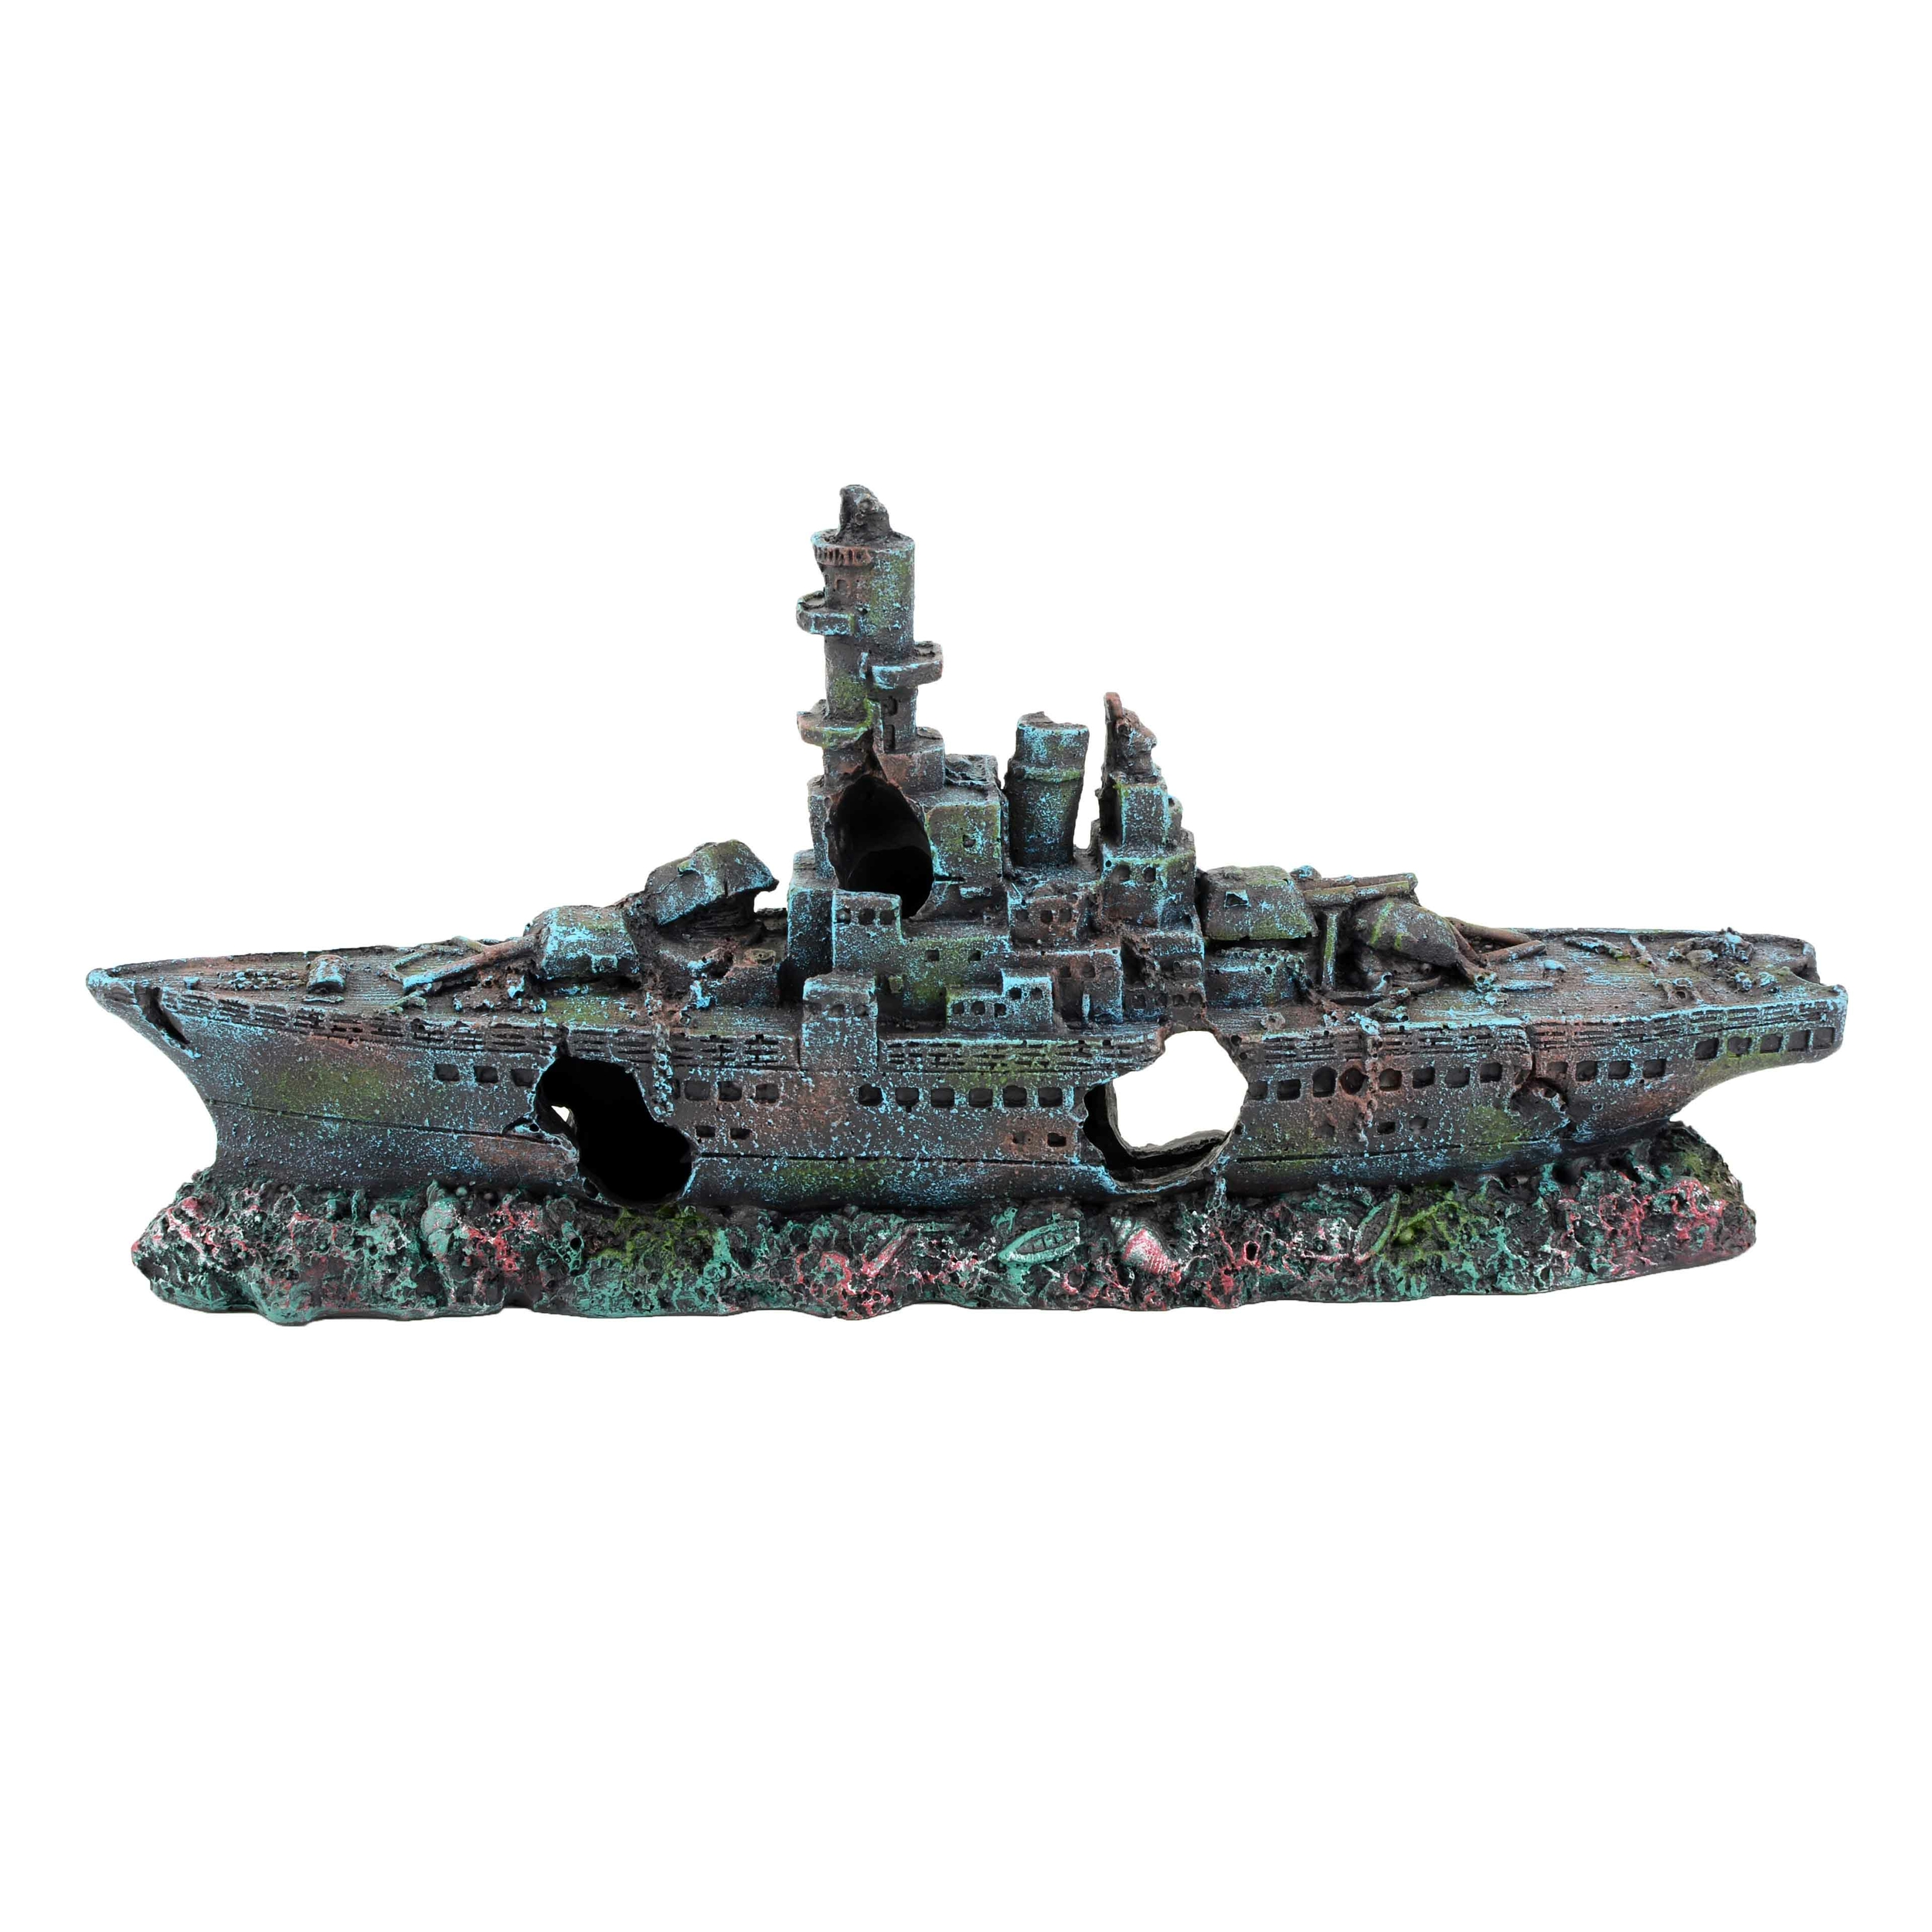 aquavie-bateau-epave-guerre-decoration-aquarium-24-x-4-5-x-11-5-cm